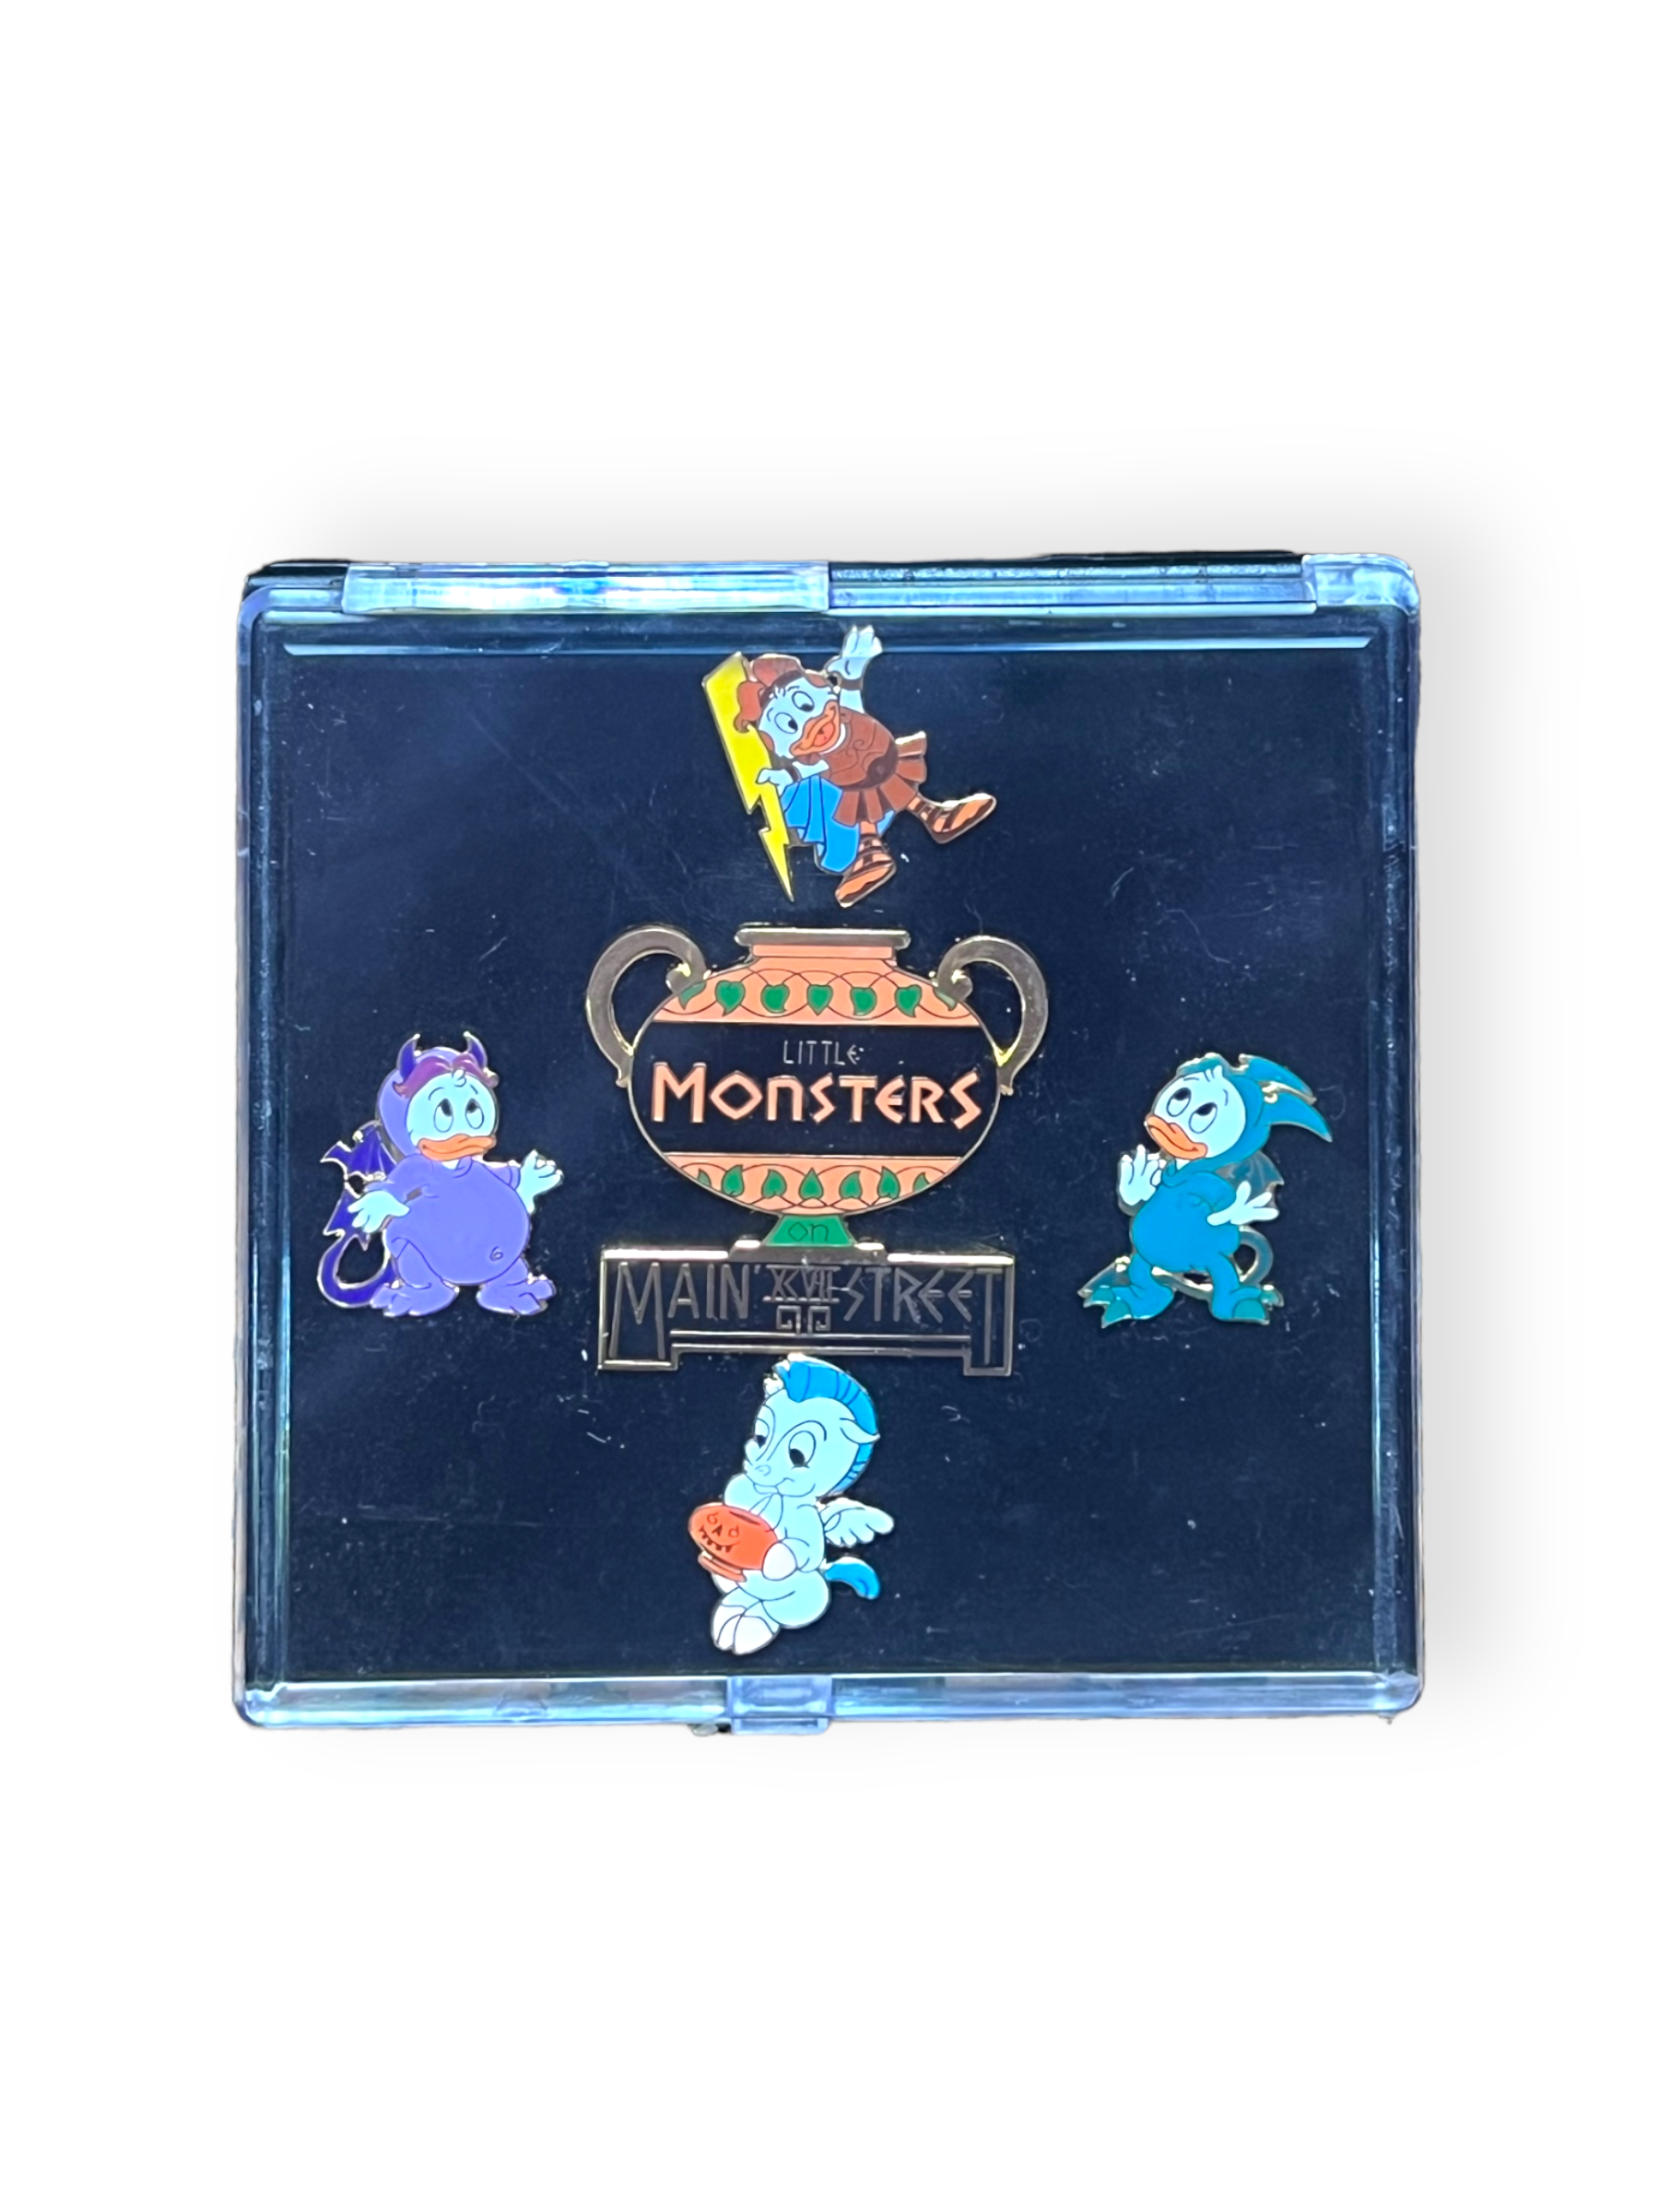 Little Monsters of Main Street 1997 Hercules Pin Set